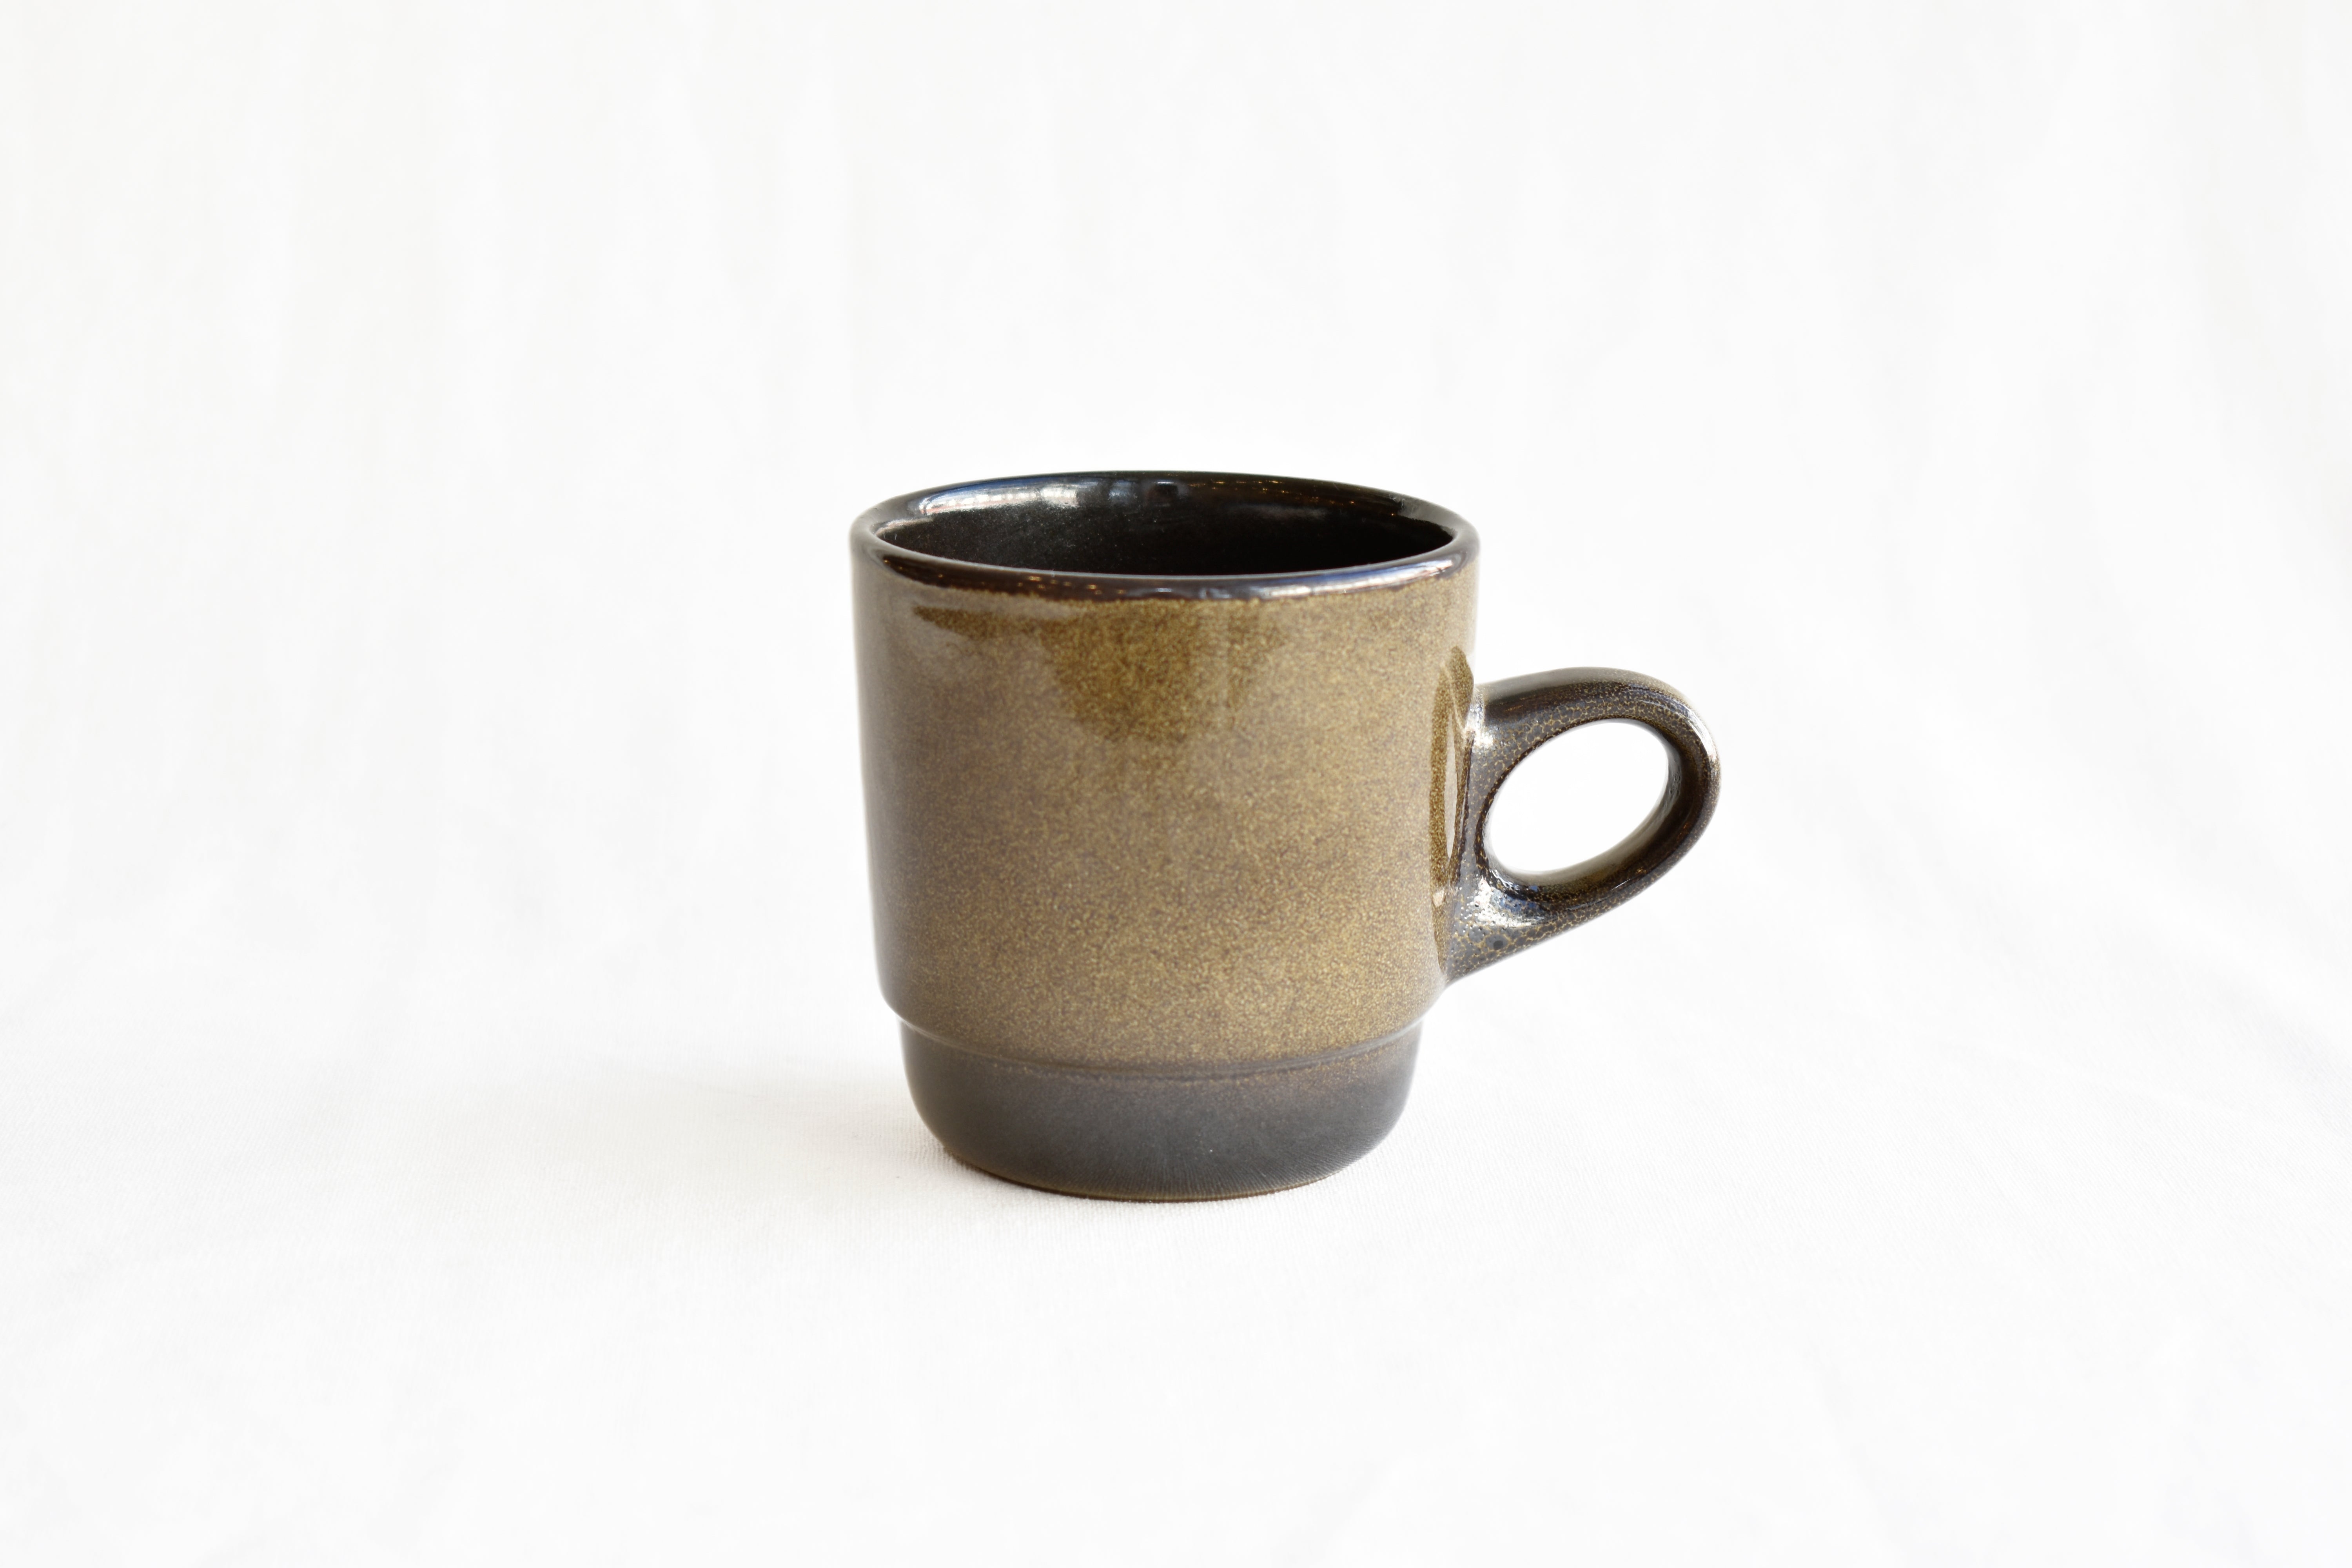 Heath Ceramics Large Mug